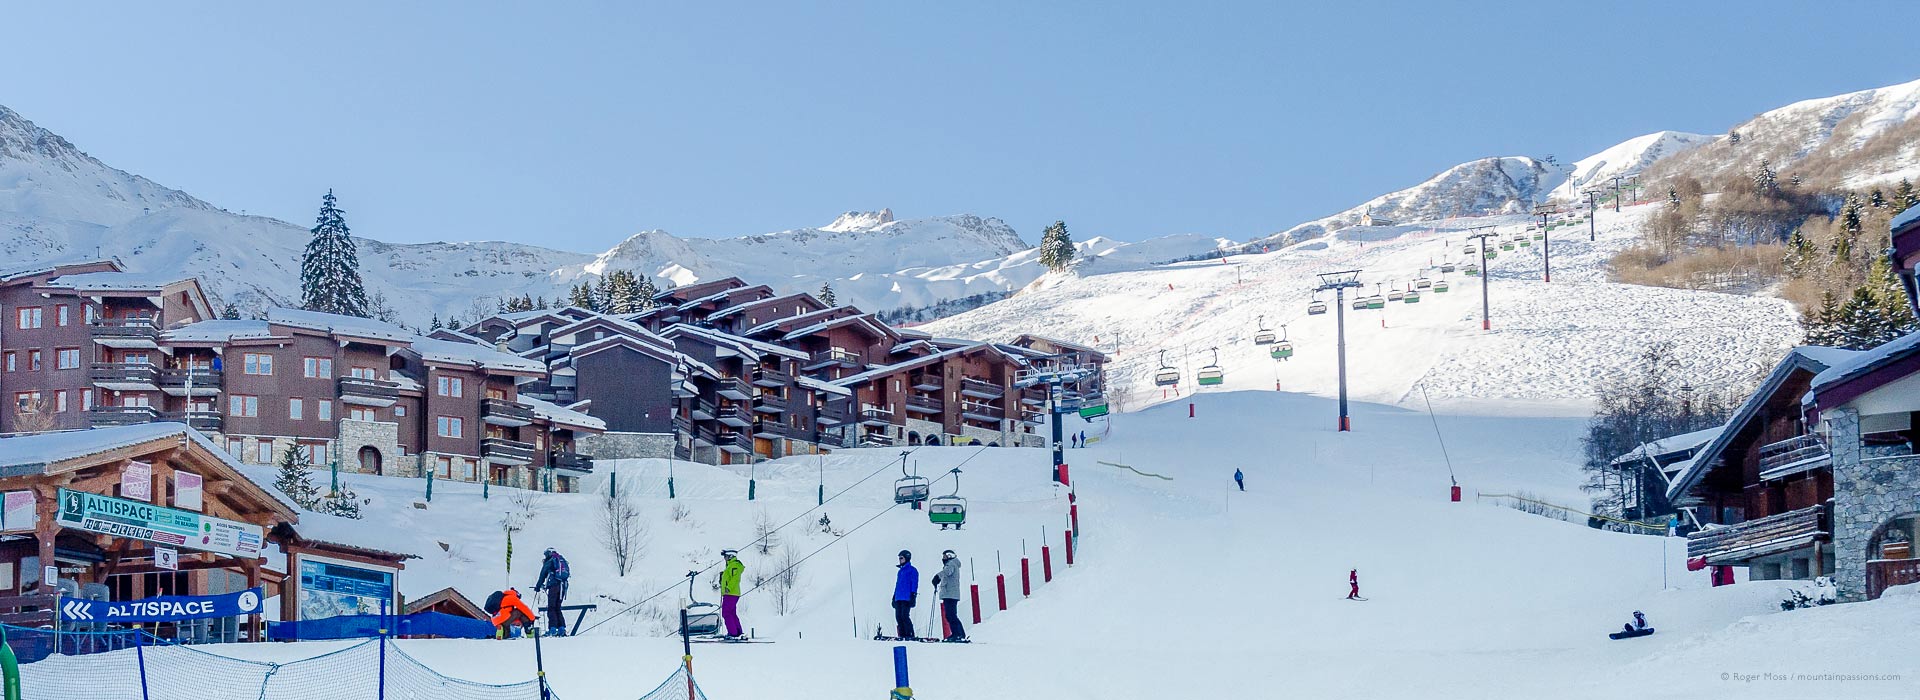 Morning skiers on front-de-neige in Valmorel ski resort, Savoie, French Alps.